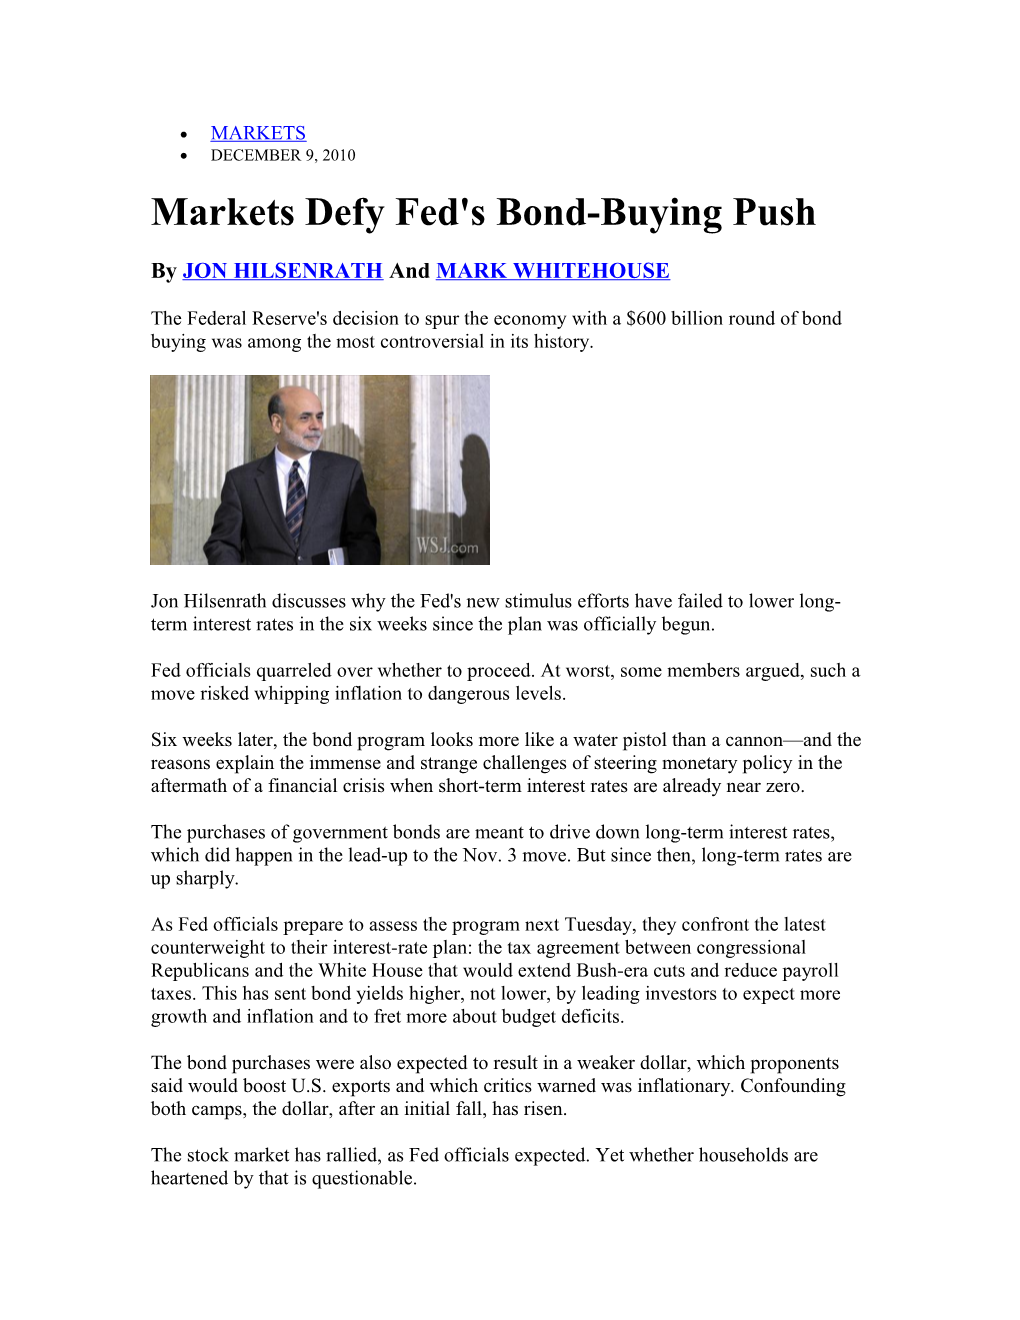 Markets Defy Fed's Bond-Buying Push